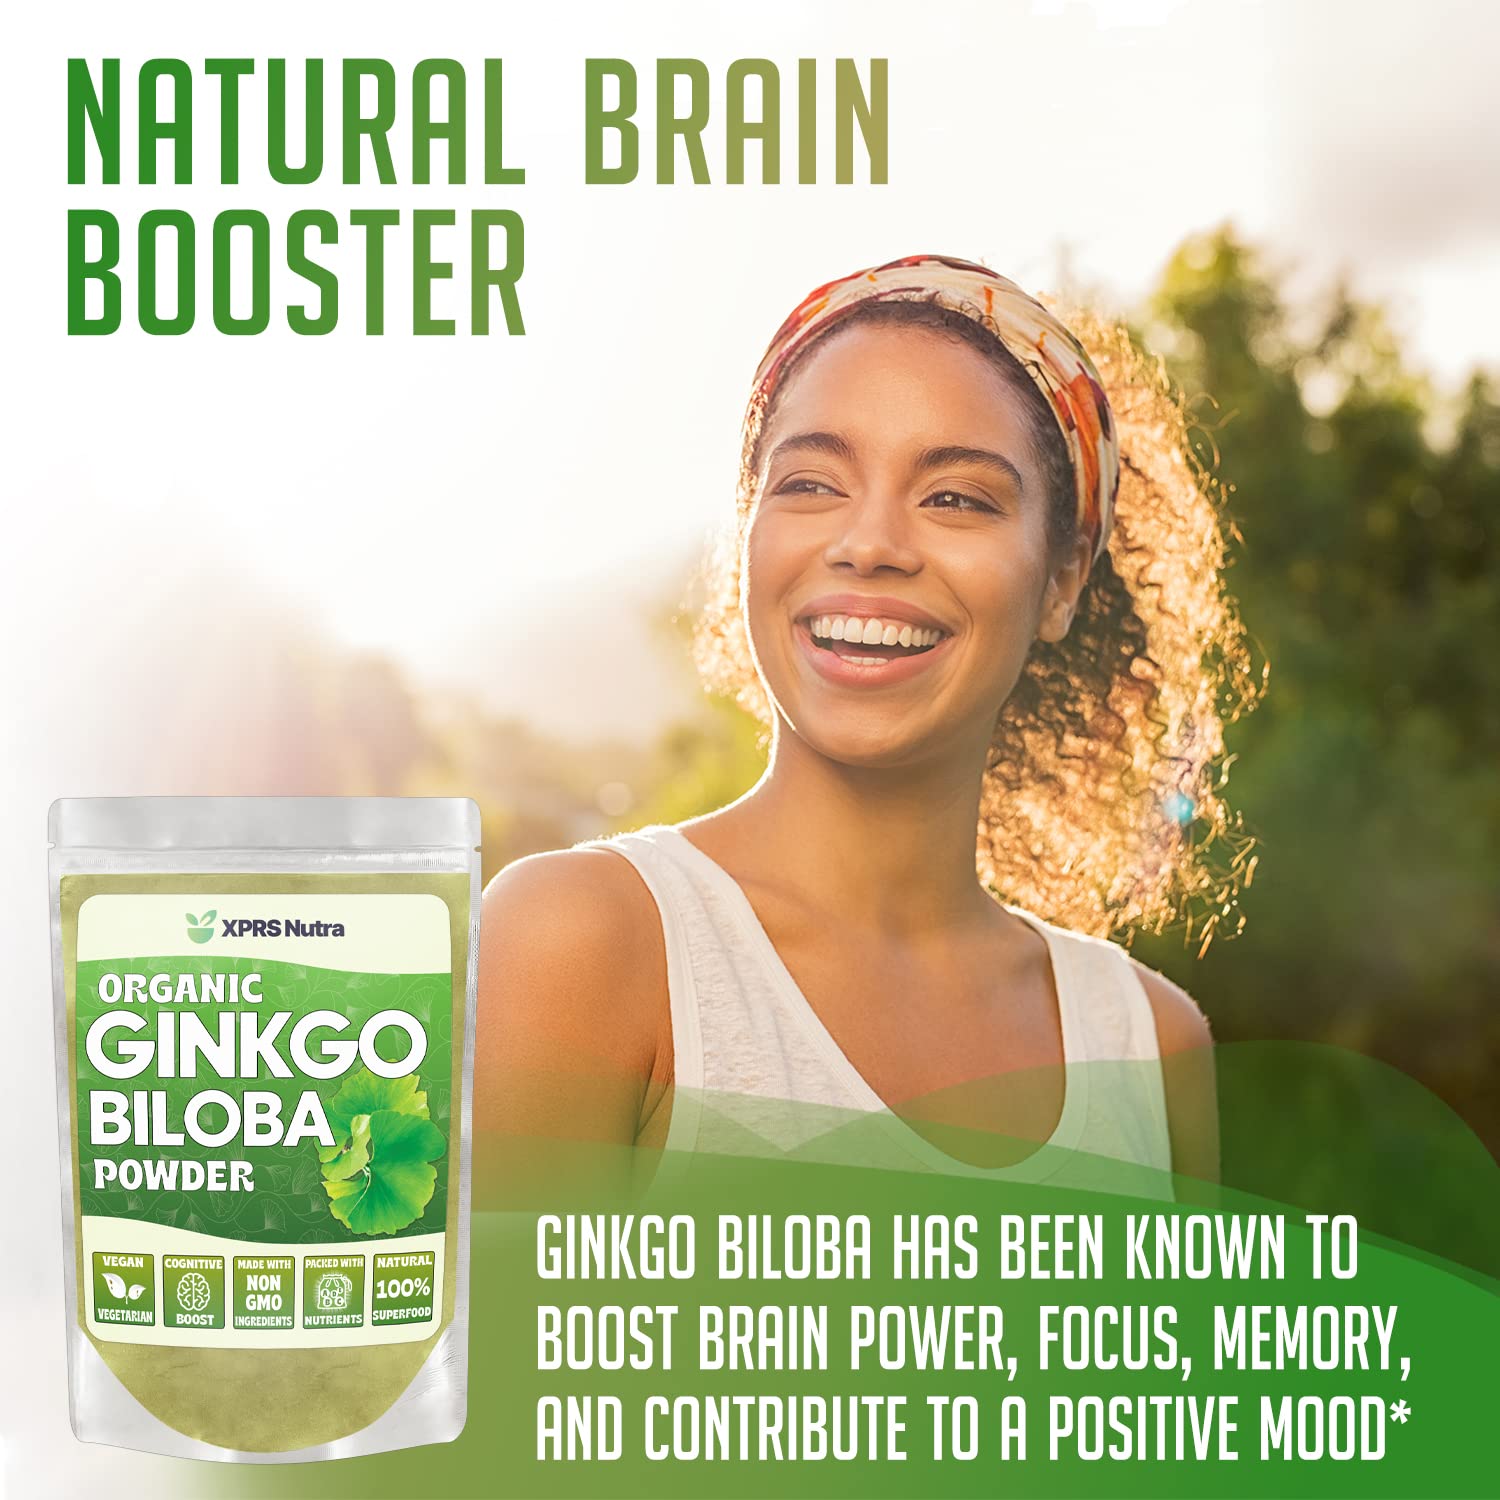 XPRS Nutra Organic Ginkgo Biloba Powder - Gingko Biloba Supplements for Cognition - Vegan Friendly Ginkoba Biloba Organic - Immunity Boosting Ginkgo Biloba Powder (8 oz)